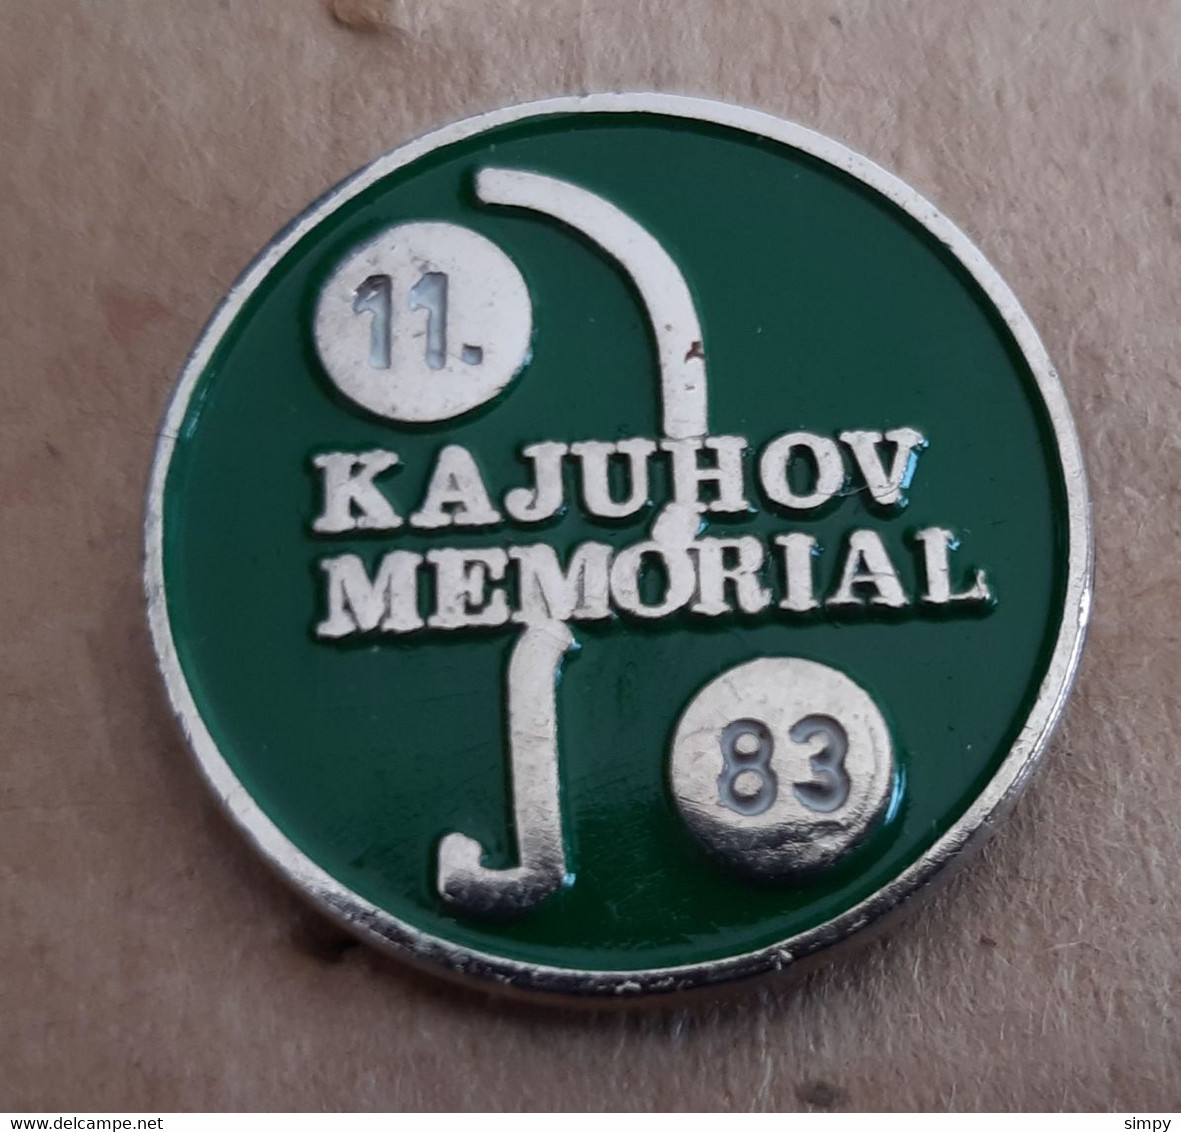 Table Tennis Tournament 11. Kajuhov Memorial  1983 Slovenia Pin Badge - Table Tennis